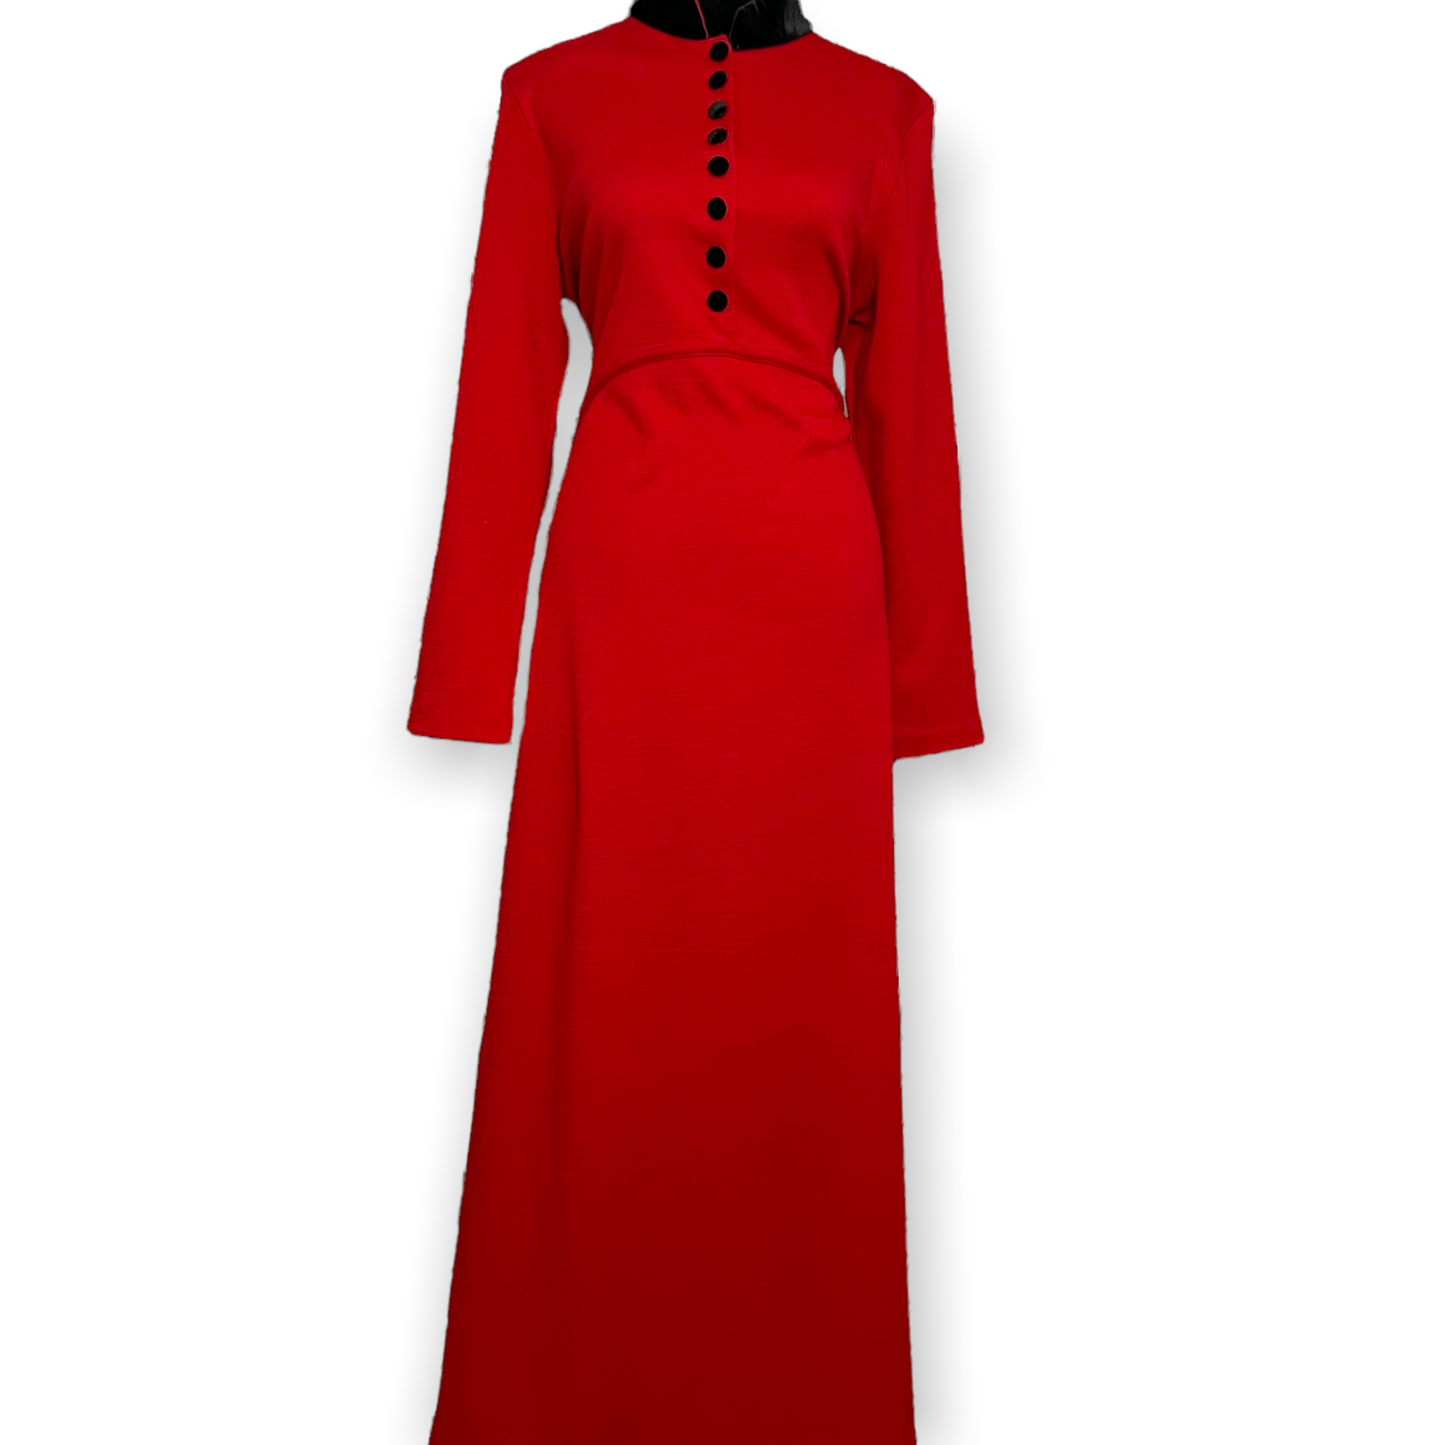 Vintage Melissa Harper Red Long Sleeve Dress Size Small